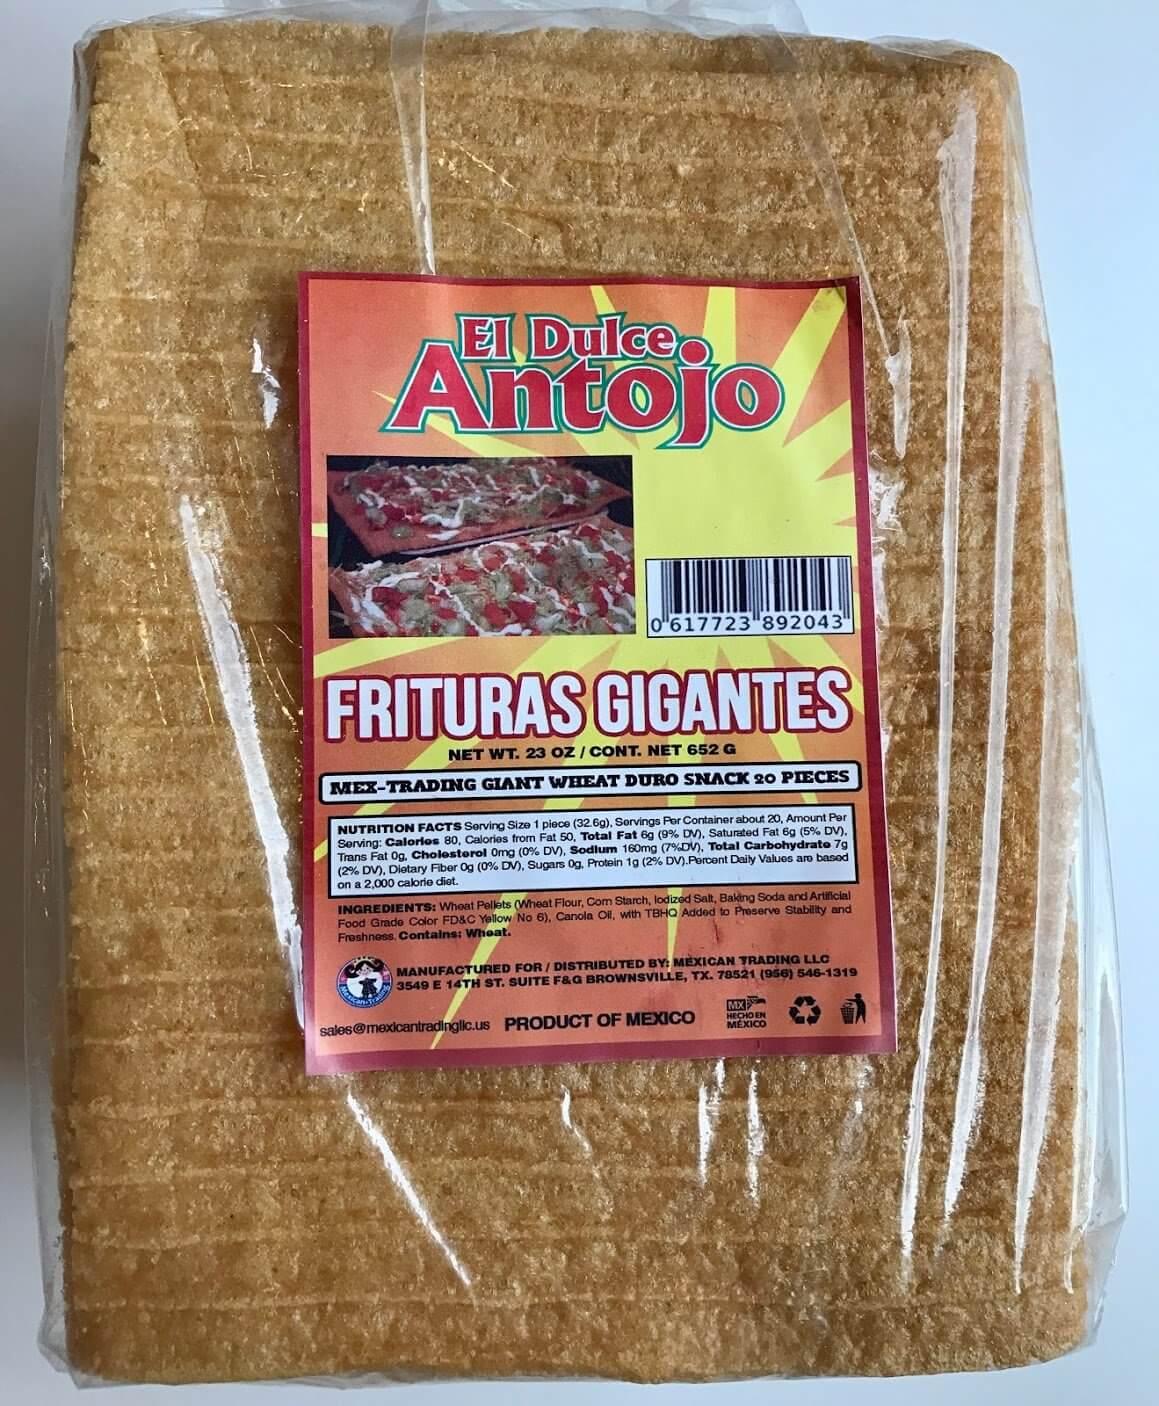 El Dulce Antojo - Mex-Trading Giant wheat Duro Snack 20 pieces, 23 oz